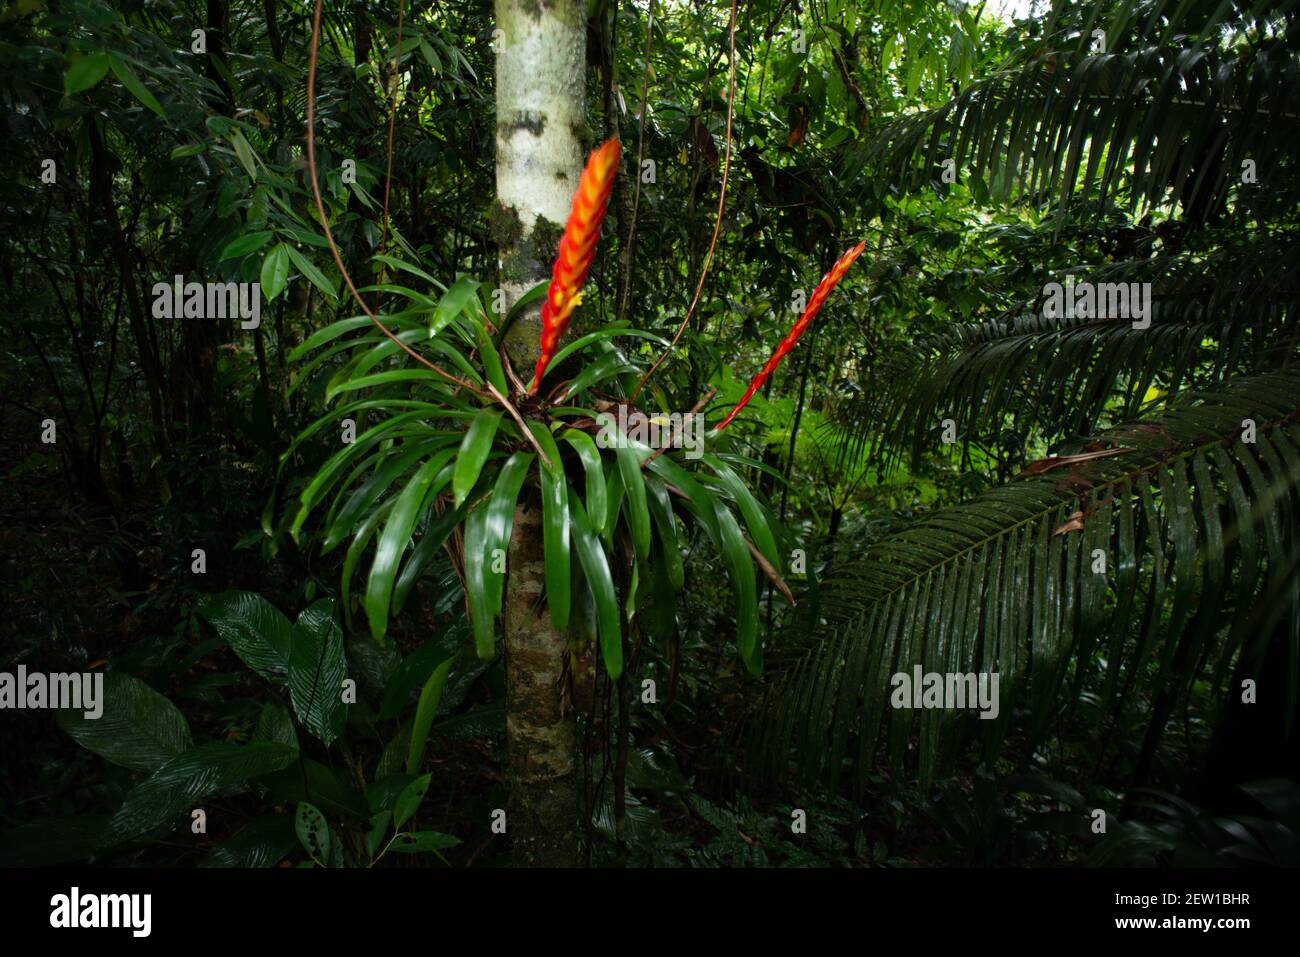 A bromeliad in flower inside the Atlantic Rainforest of SE Brazil Stock Photo